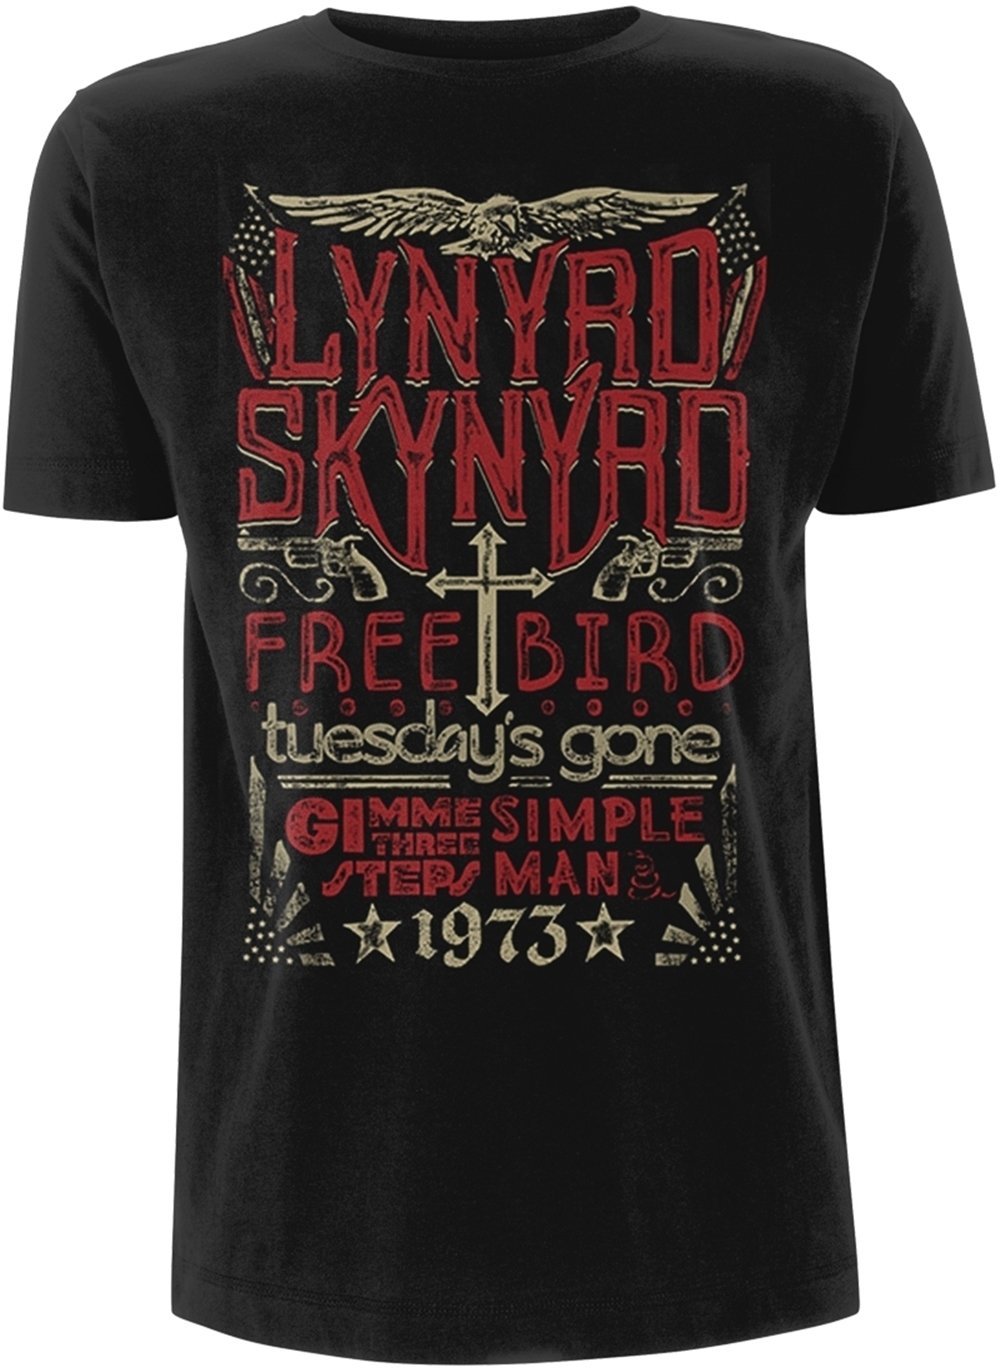 T-Shirt Lynyrd Skynyrd T-Shirt Freebird 1973 Hits Male Black S